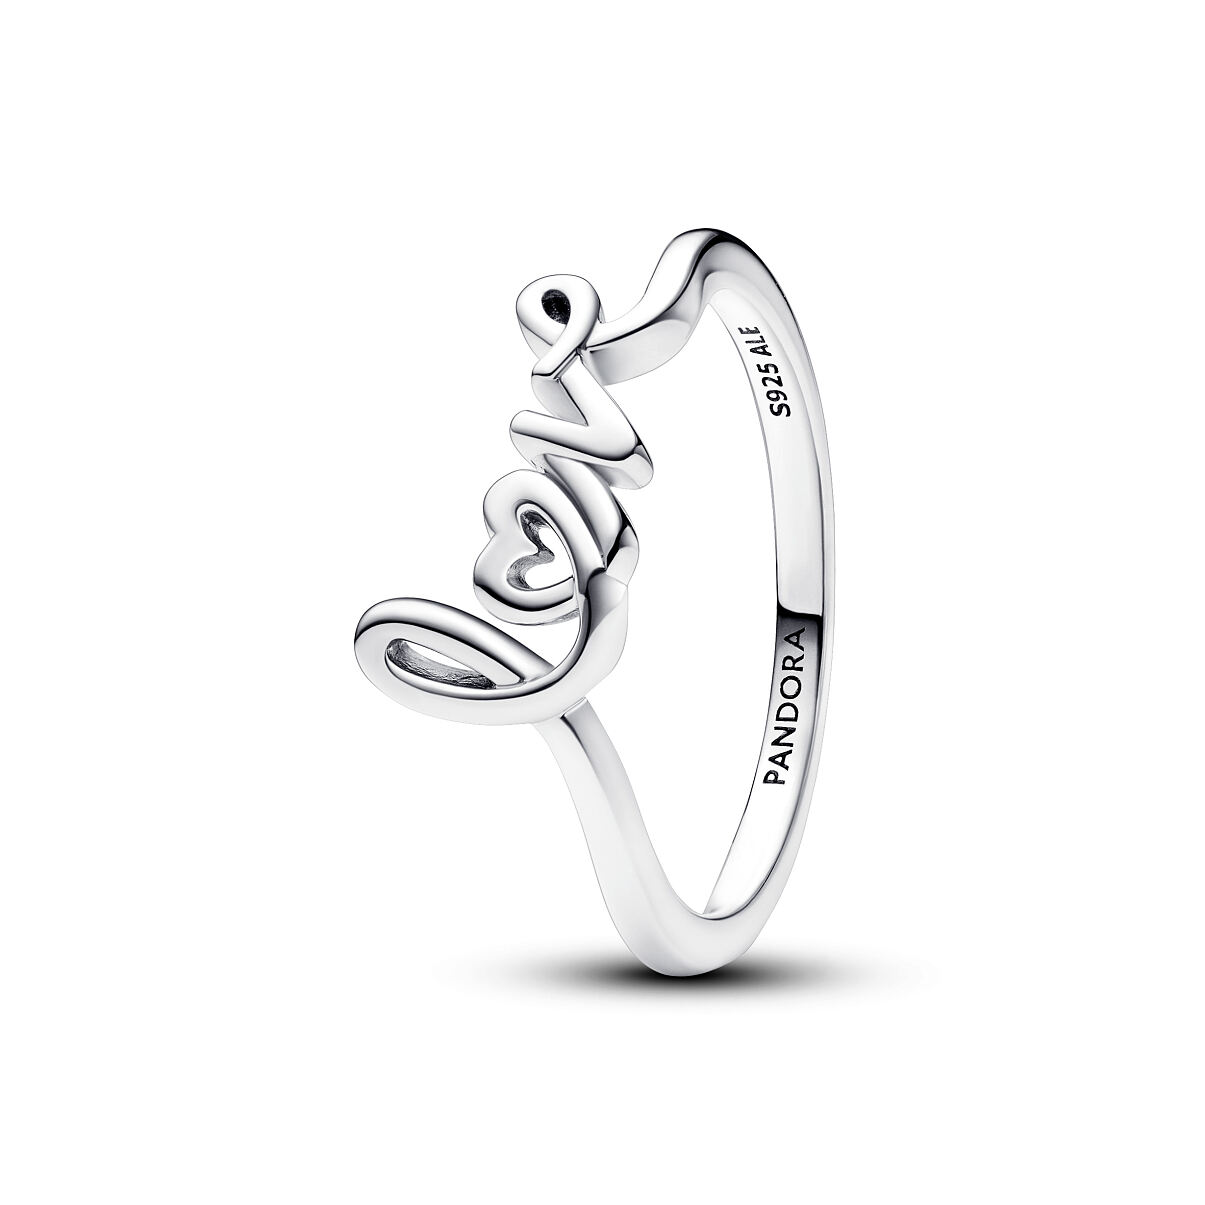 Pandora_Handgeschriebenes Love Ring_193058C00_39,00 Euro (2)